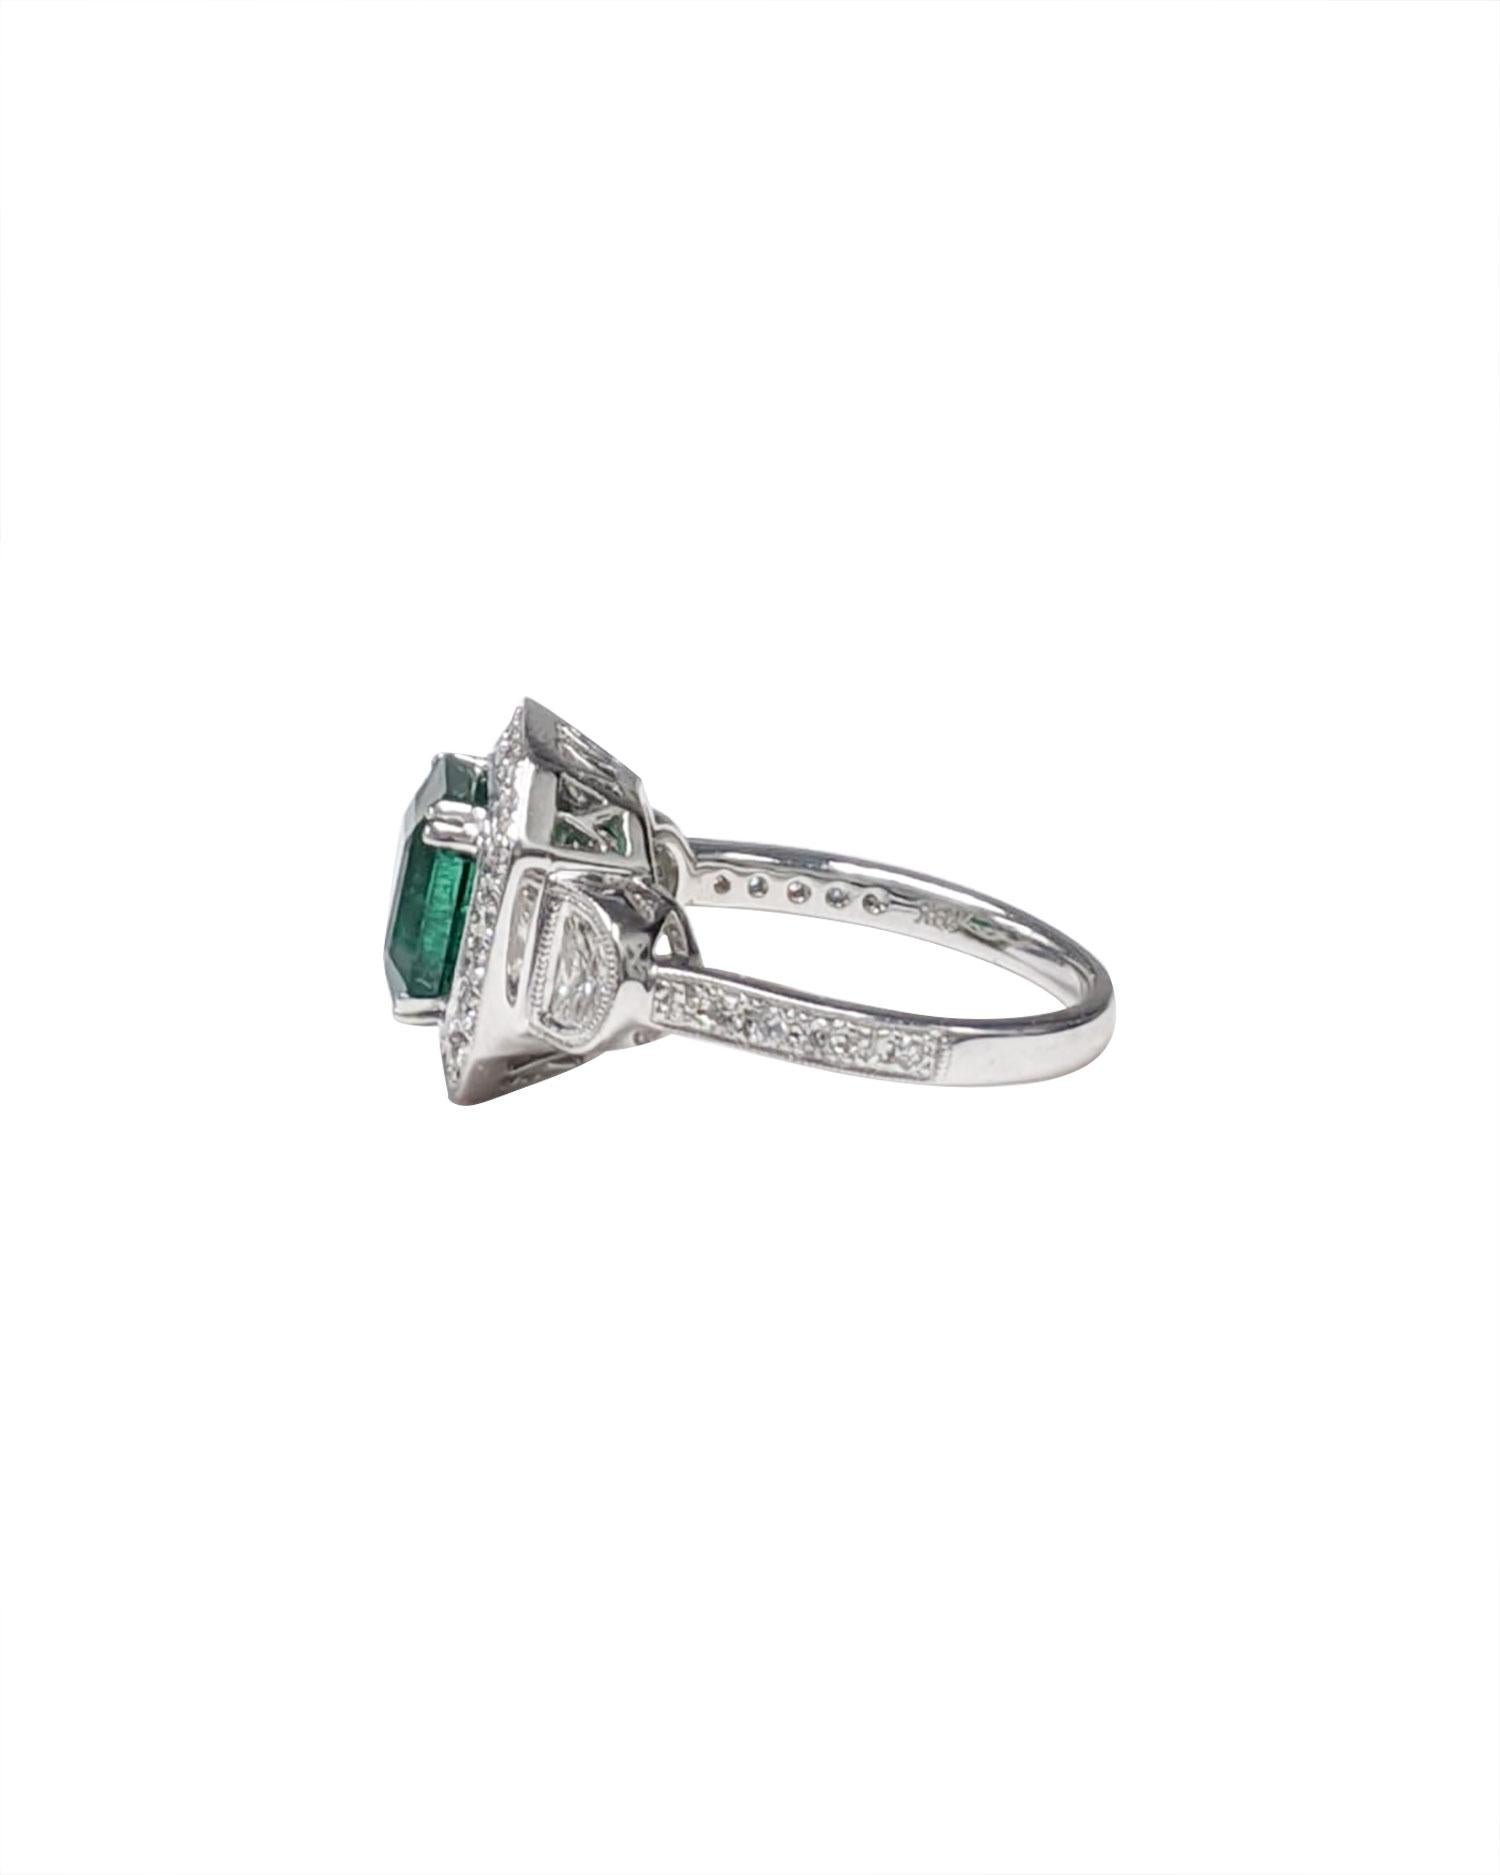 Women's 3-Stone Emerald Cut Emerald and  White Diamond Ring For Sale